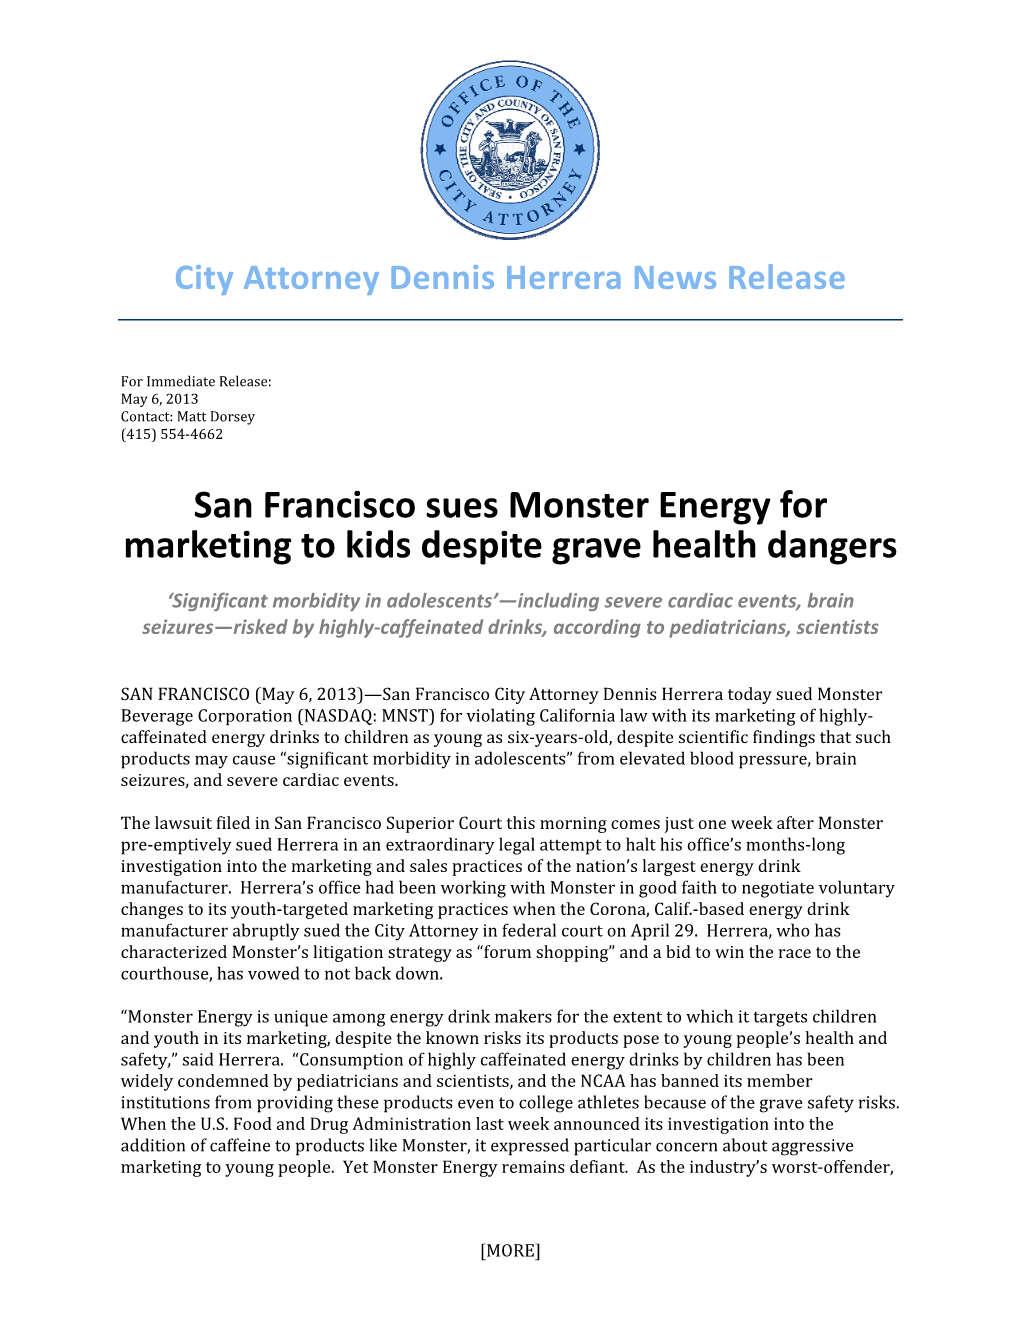 San Francisco Sues Monster Energy for Marketing to Kids Despite Grave Health Dangers